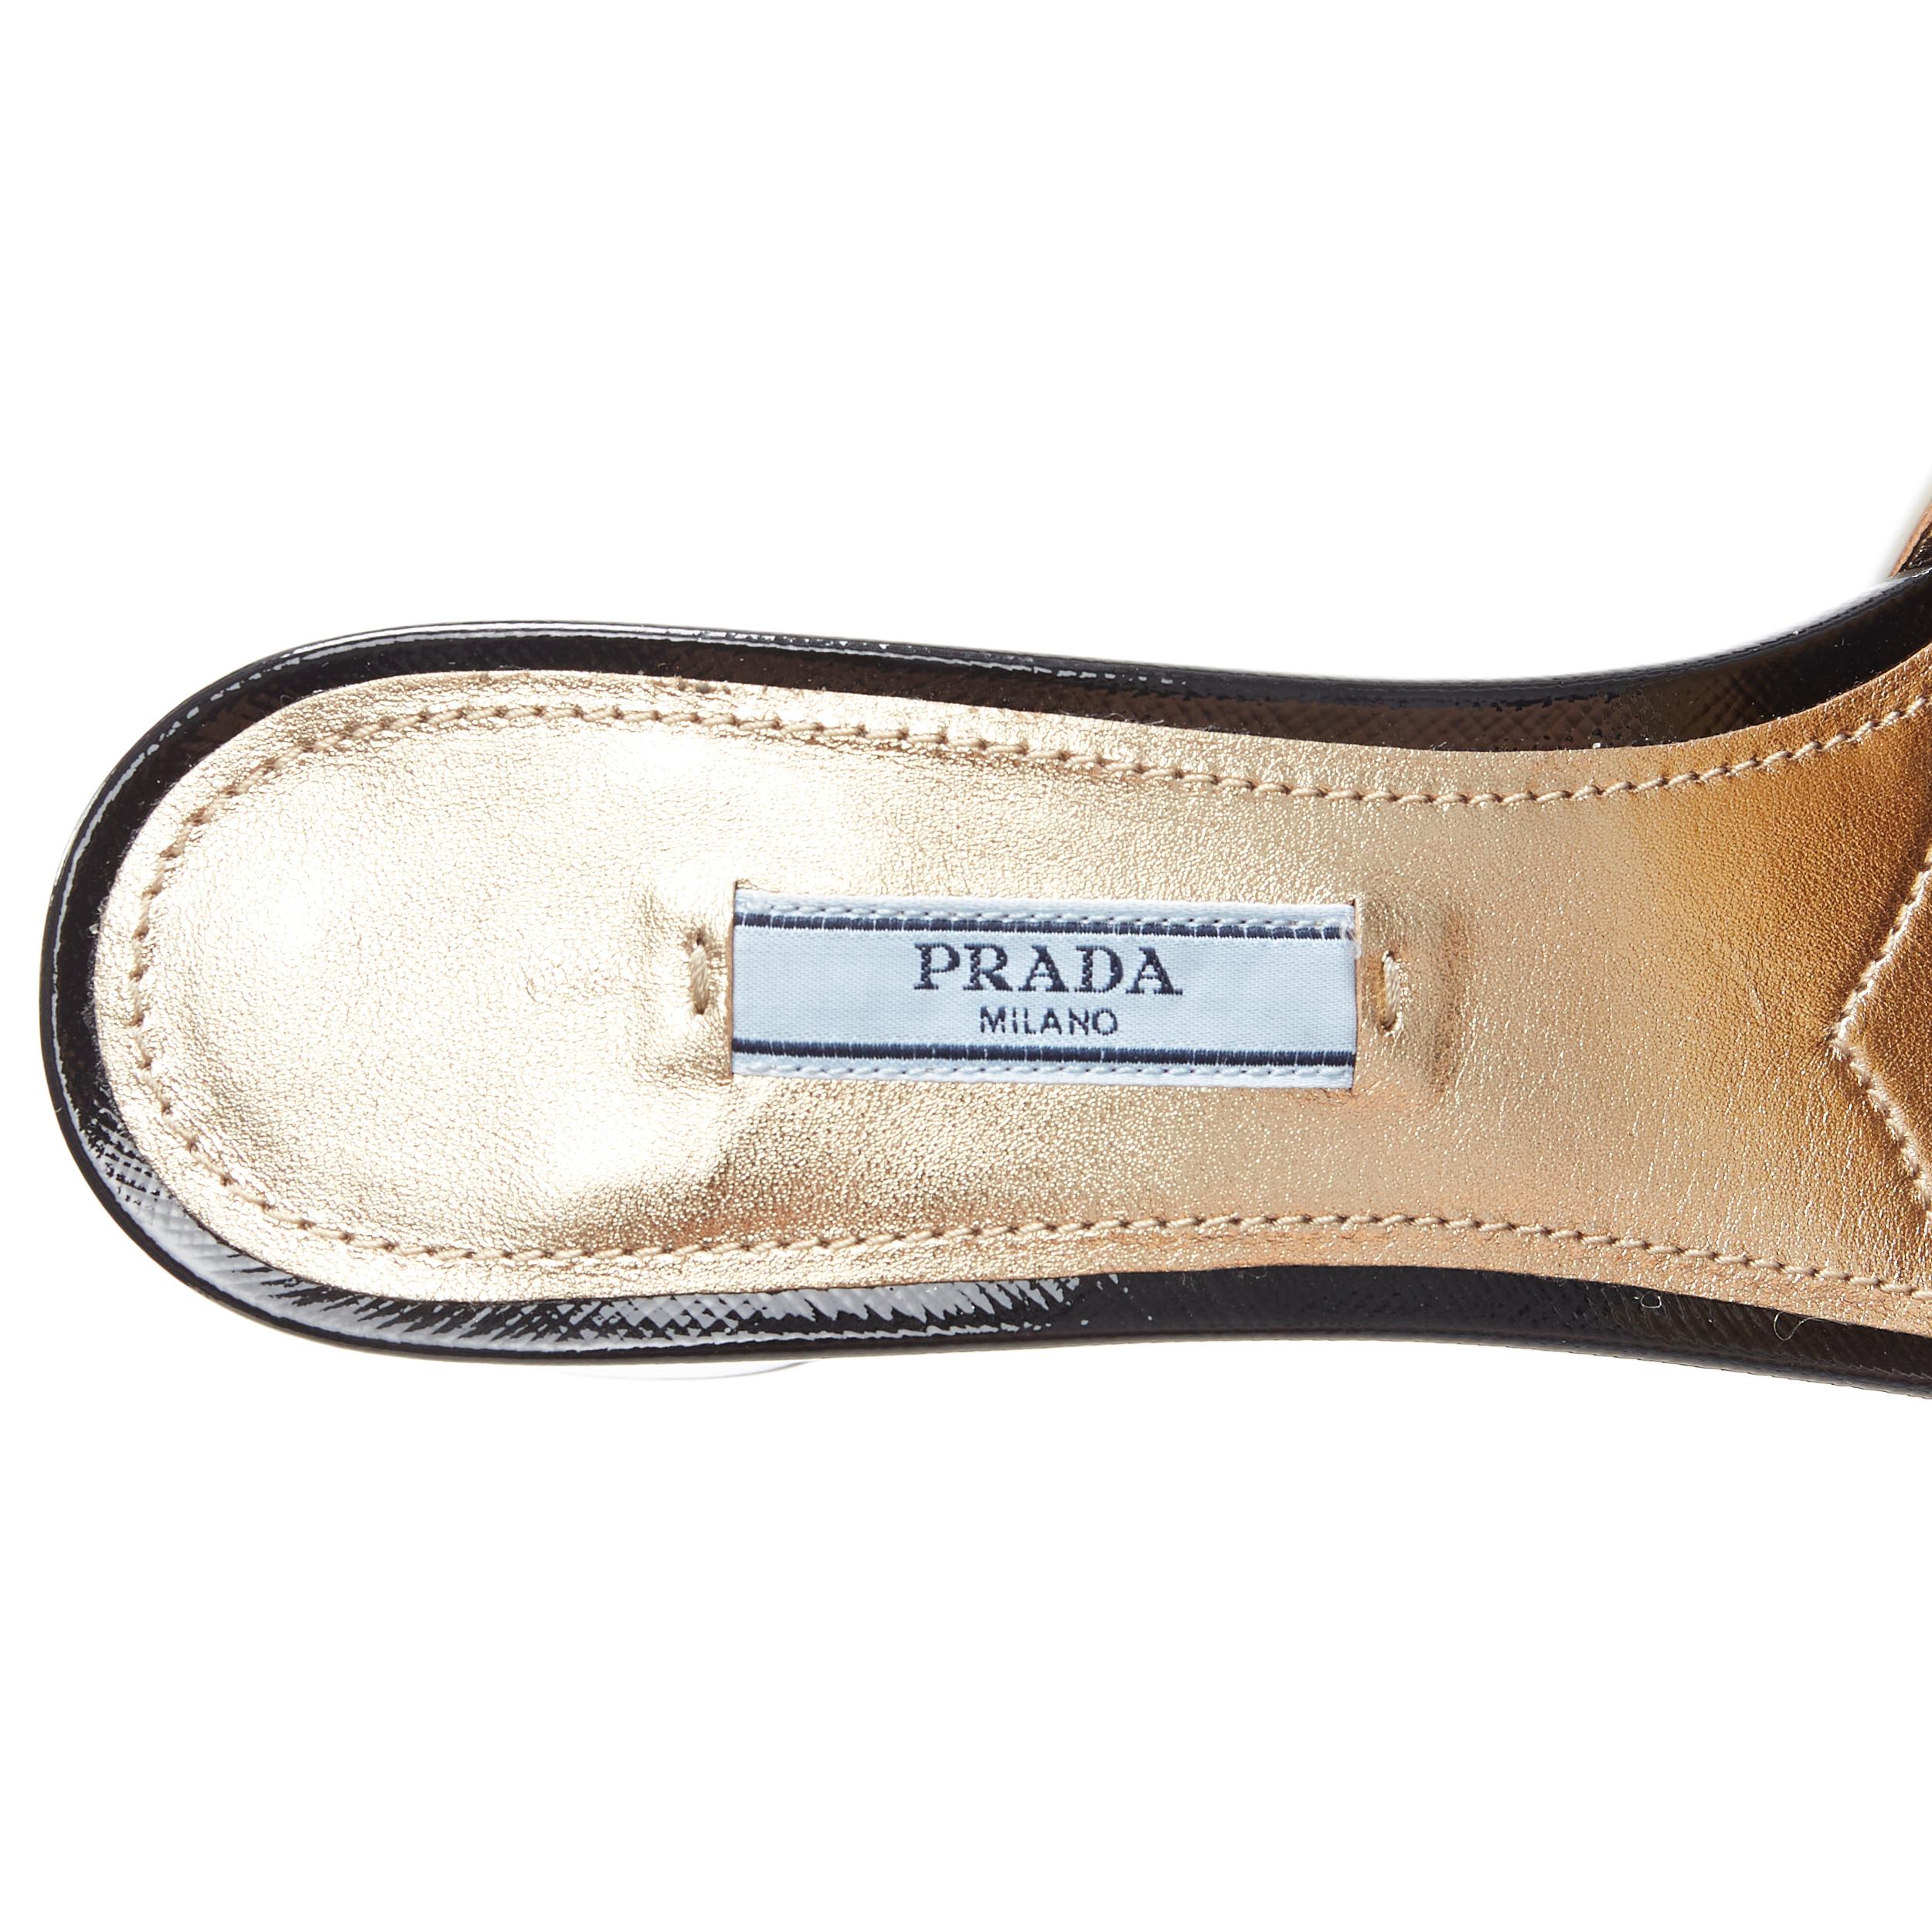 new PRADA black white saffiano leather gold logo open toe mule clog sandal EU39 5